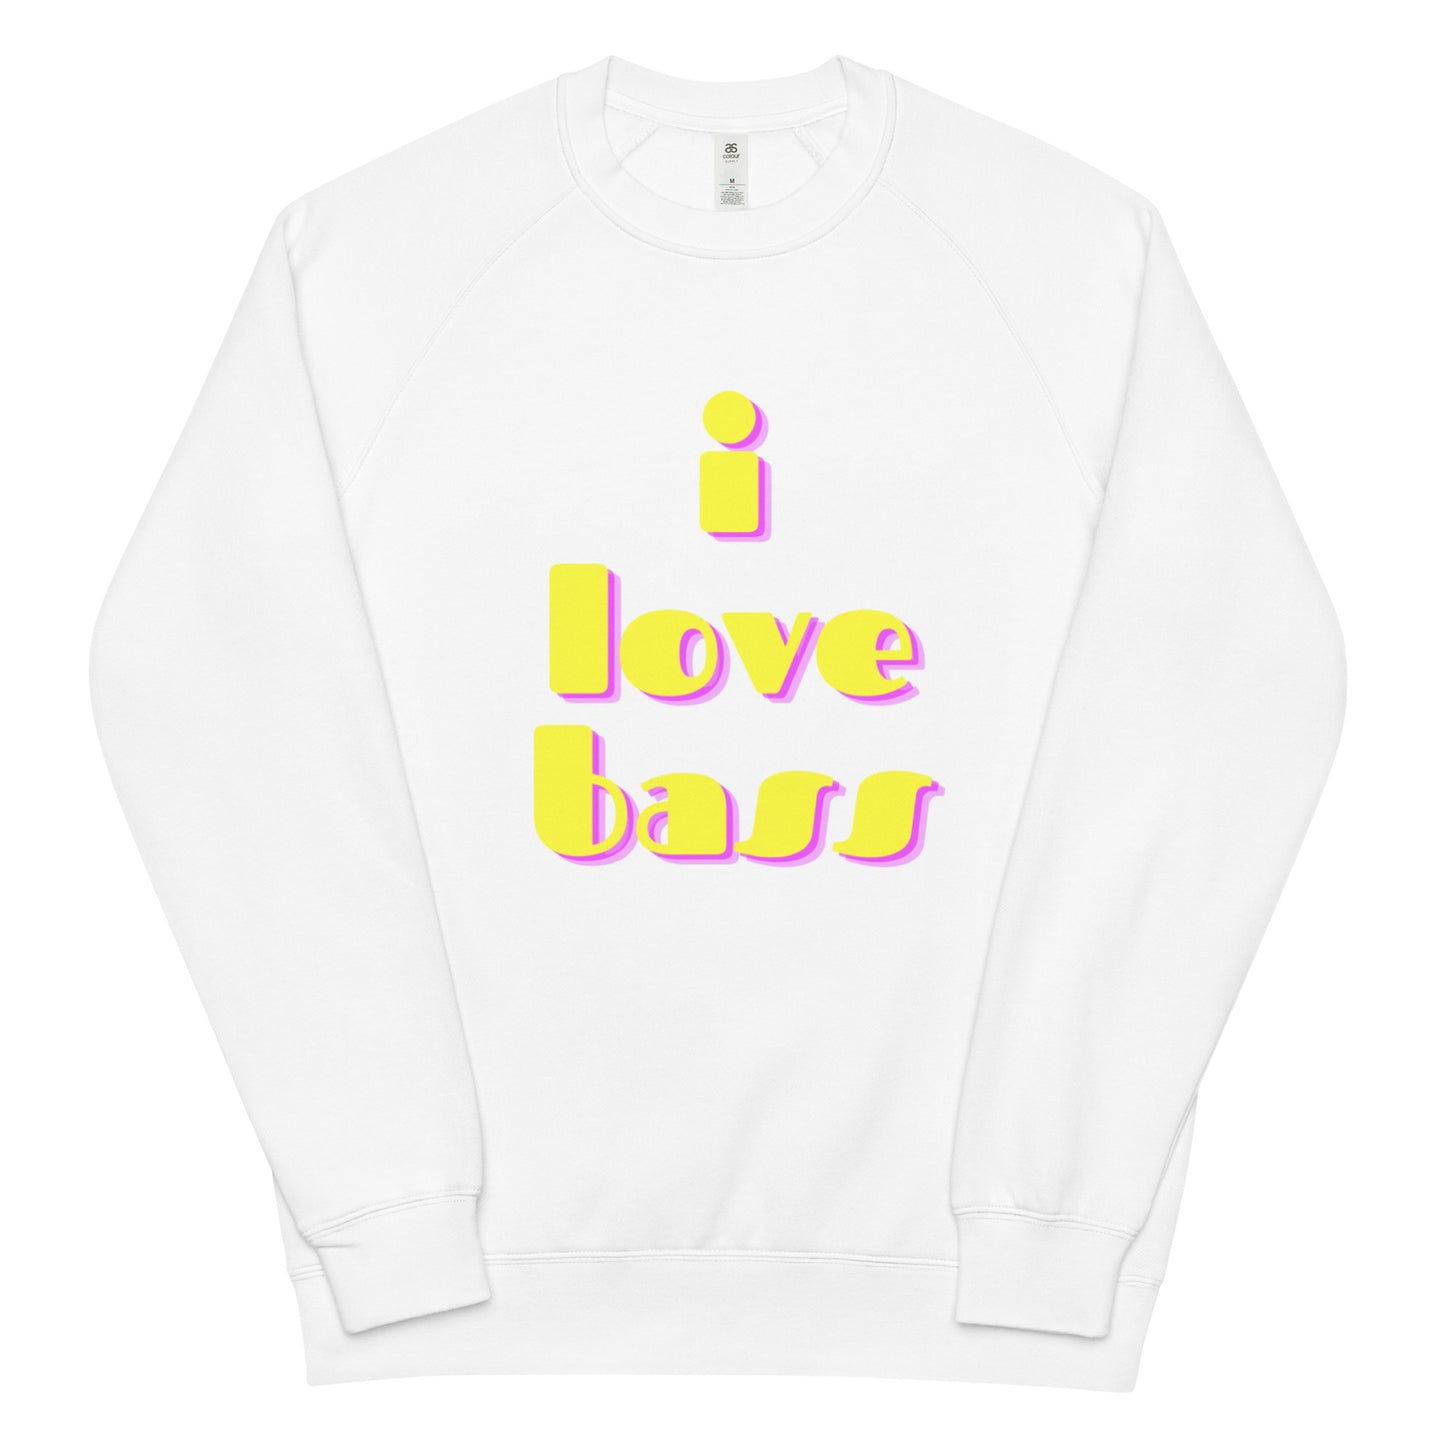 " i love bass" Unisex Sweatshirt!